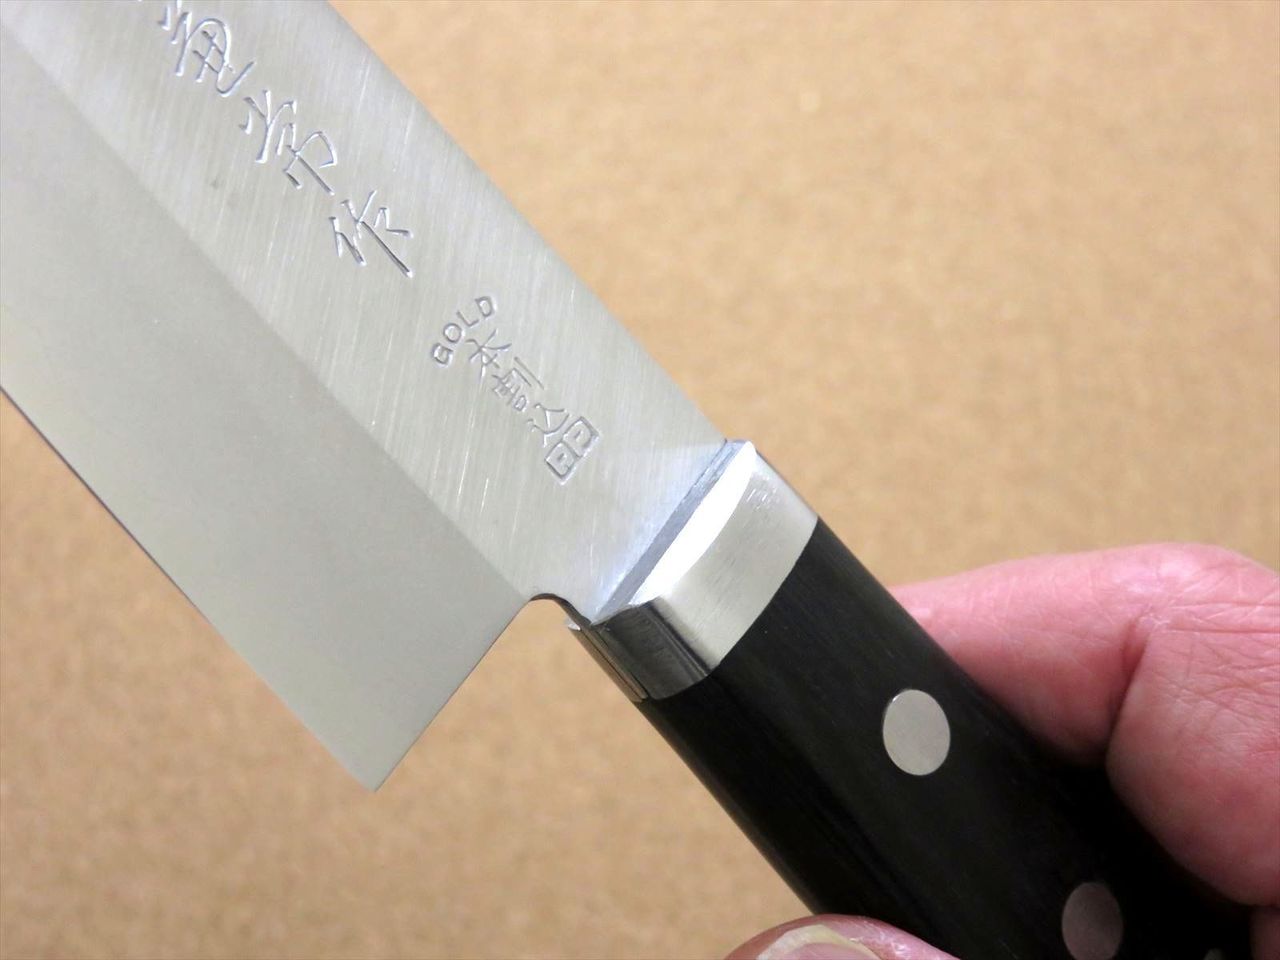 Japanese Kanetsune Kitchen Gyuto Chef's Knife 7.1 inch VG-10 3 layers SEKI JAPAN